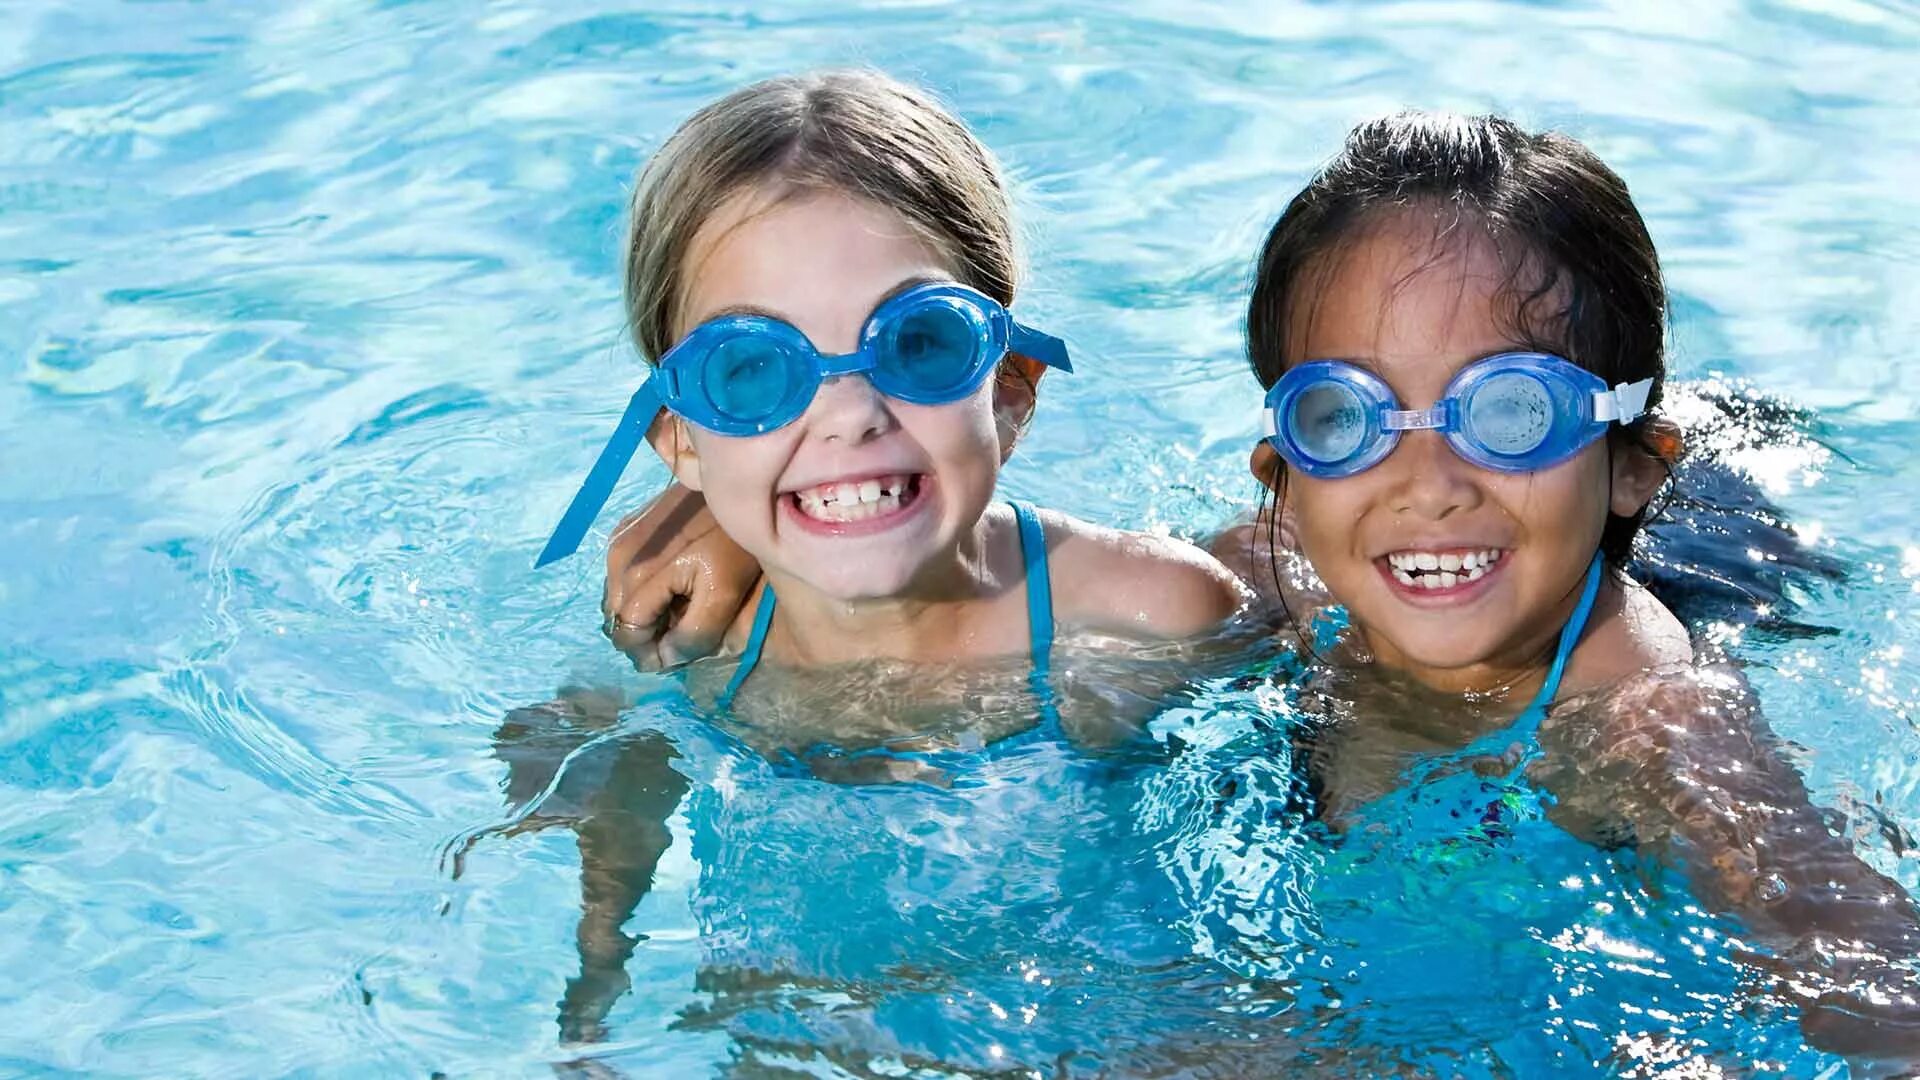 Плавание дети. Детское плавание реклама. Top view of children swimming. How to clean Swim Goggles and keep Swim Goggles from fogging?. Swimming activities